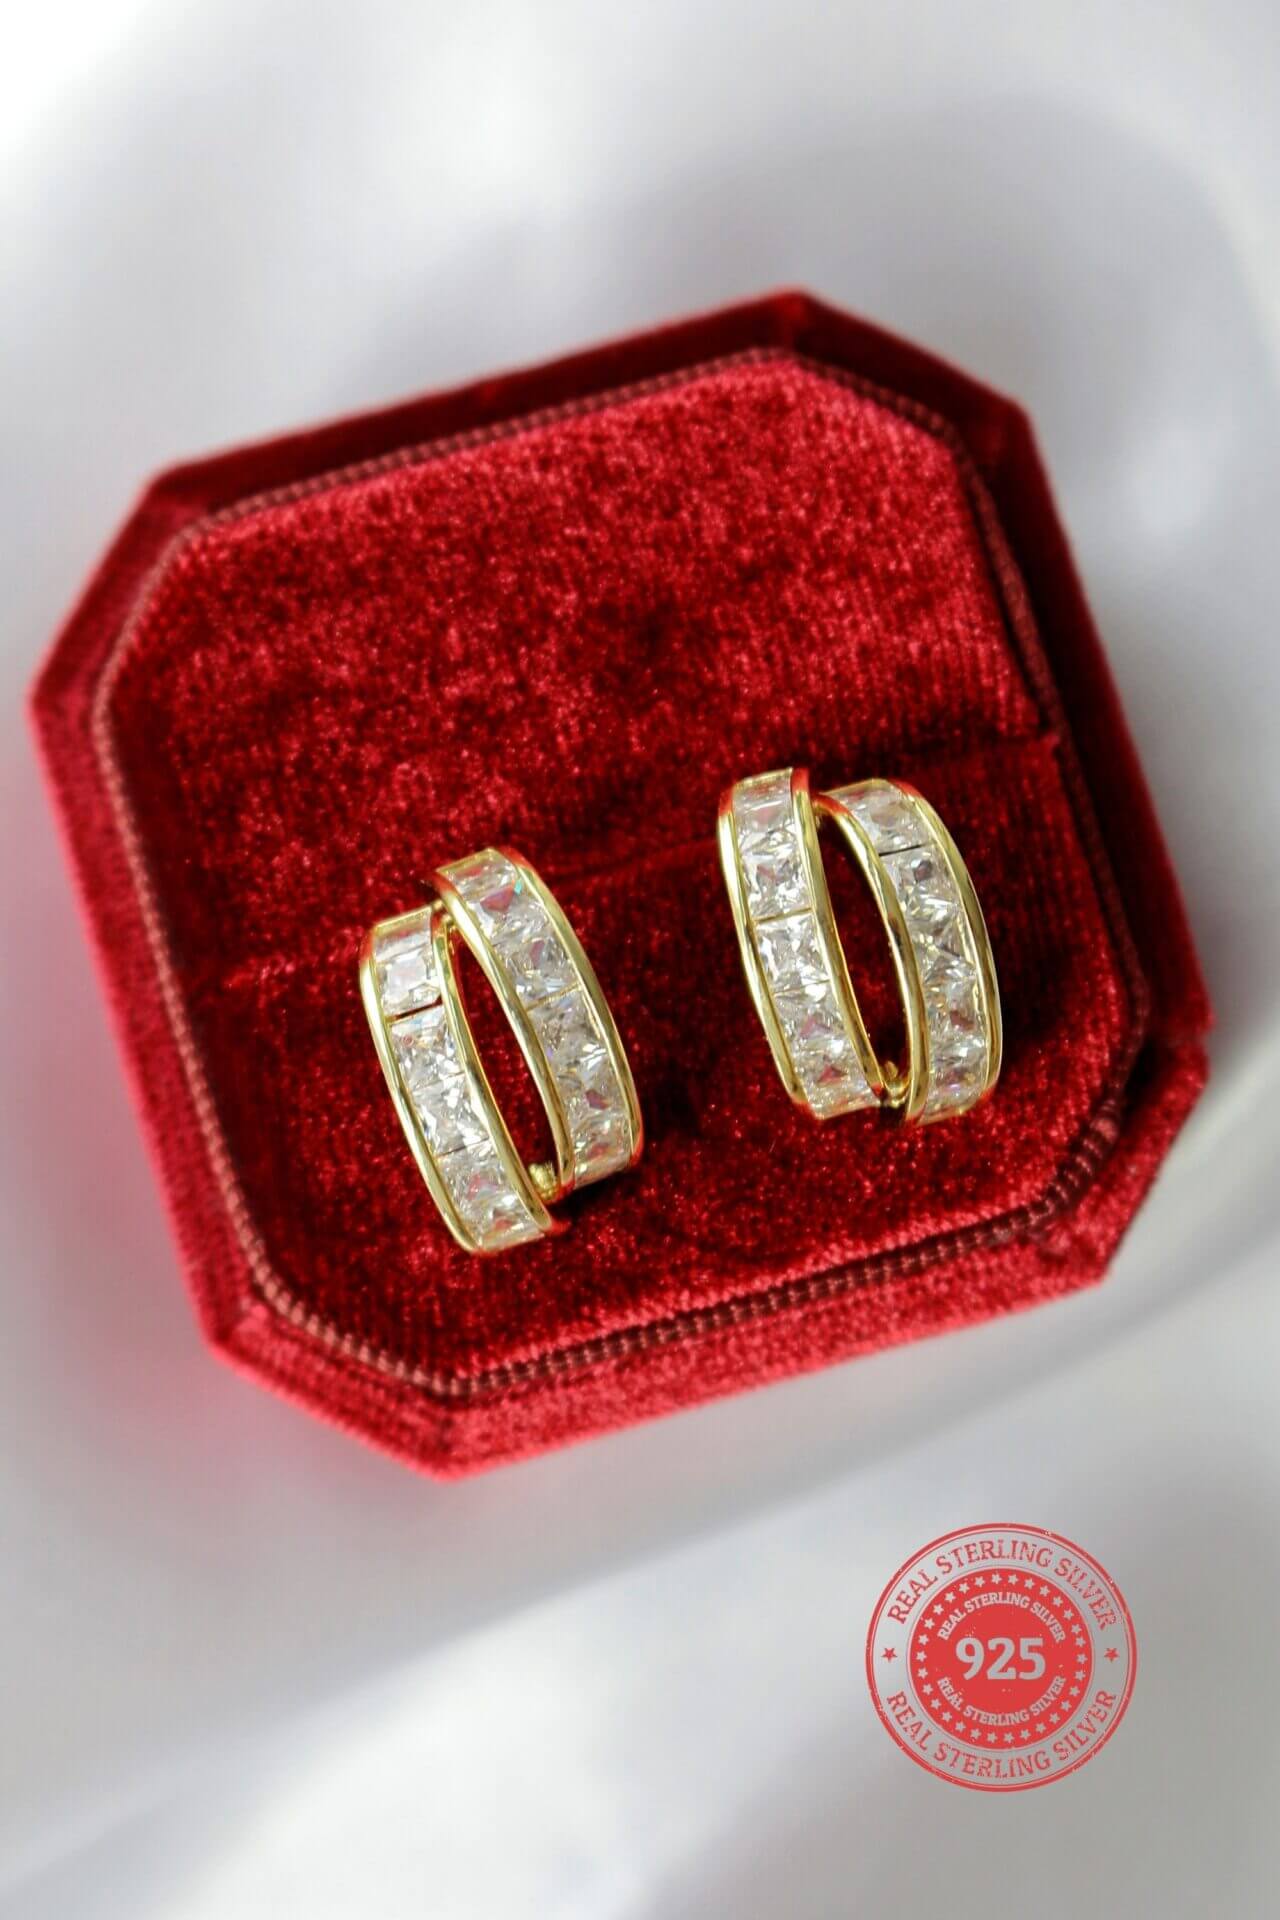 24 karats gold plated stud earrings